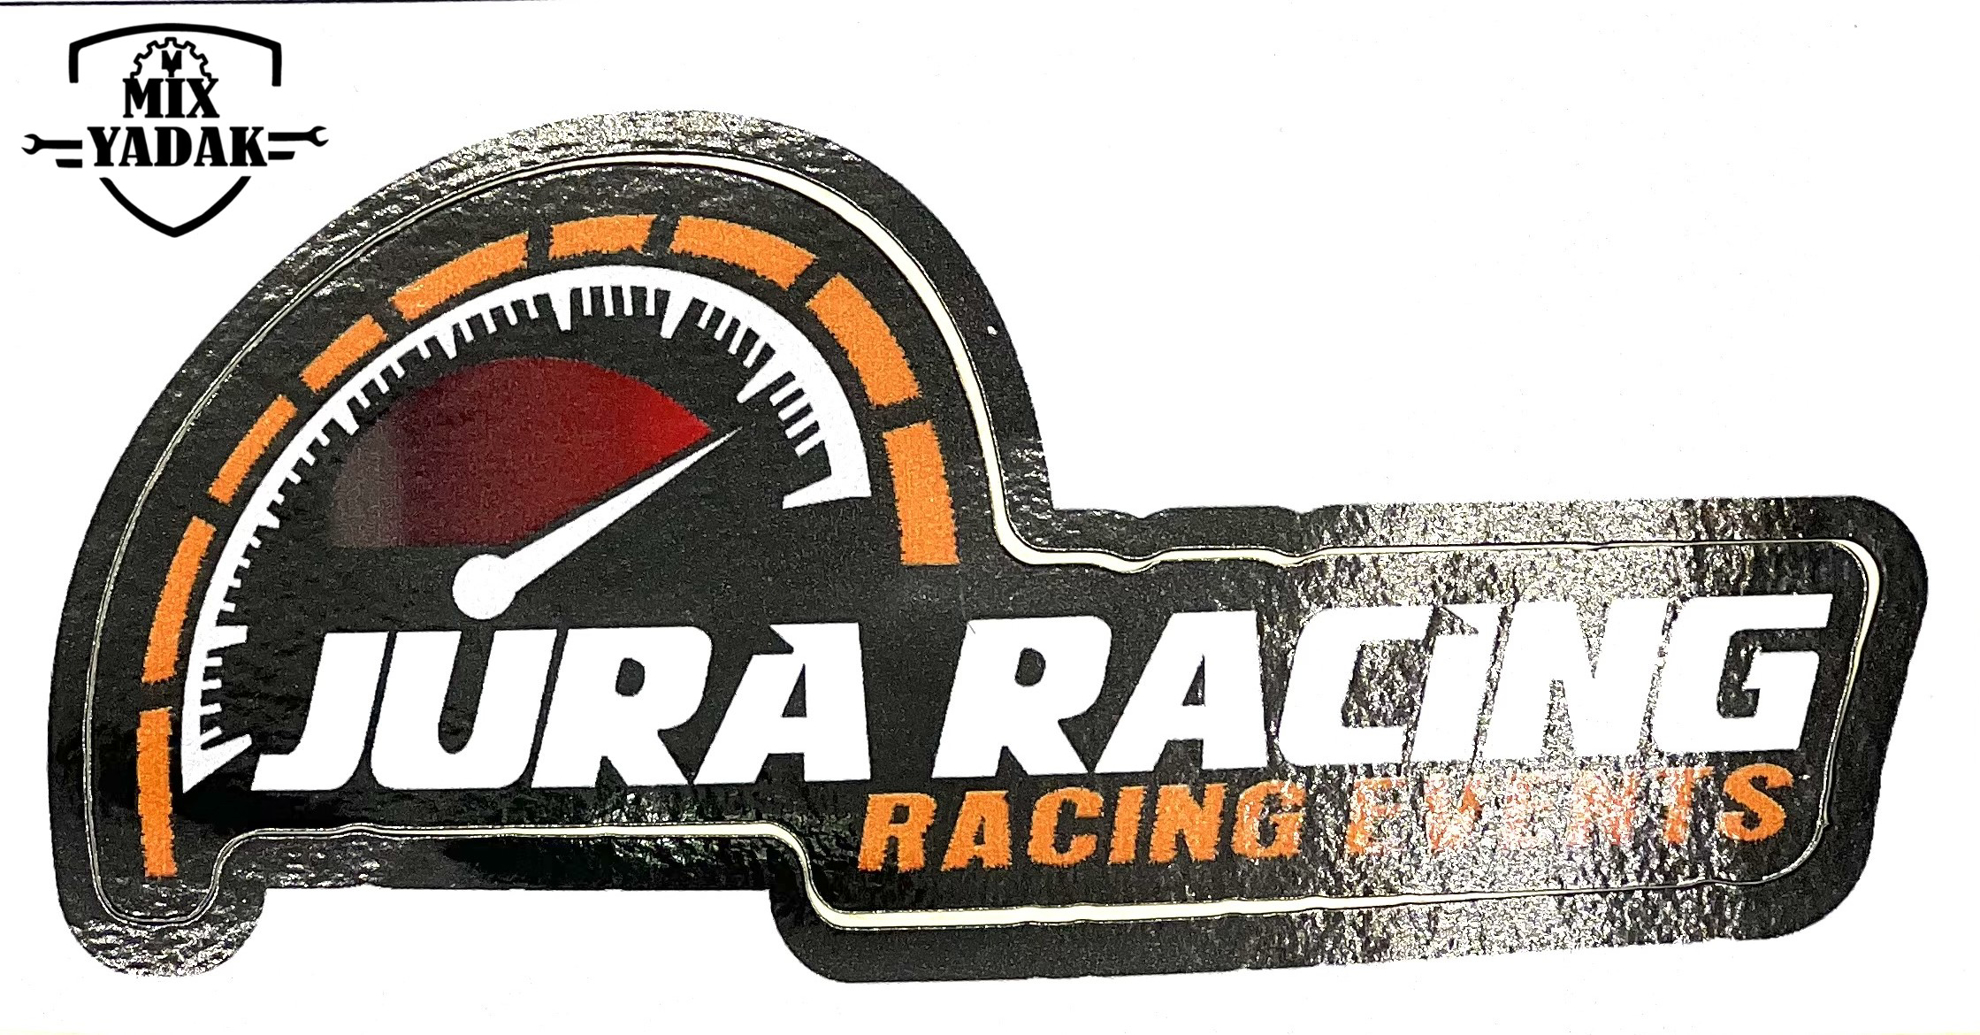 تصویر از برچسب JURA RACING racing events  B3